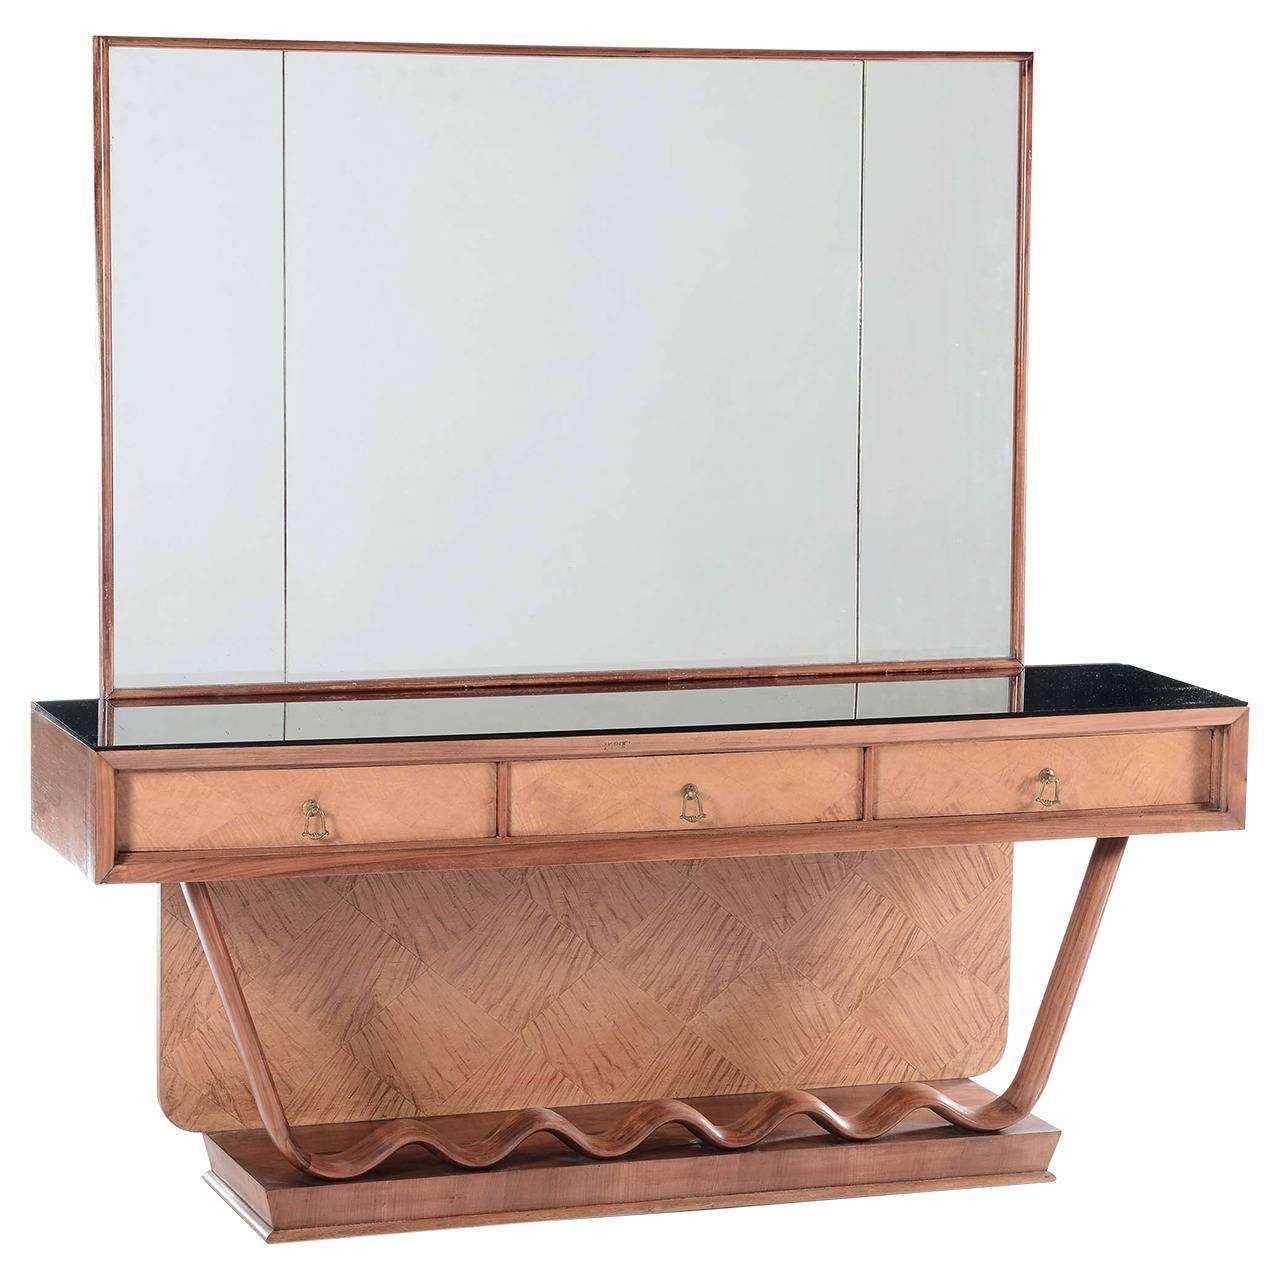 Big mirror with a wood frame, by Osvaldo Borsani, prod Italy, 1940 ca
Free shipping to London